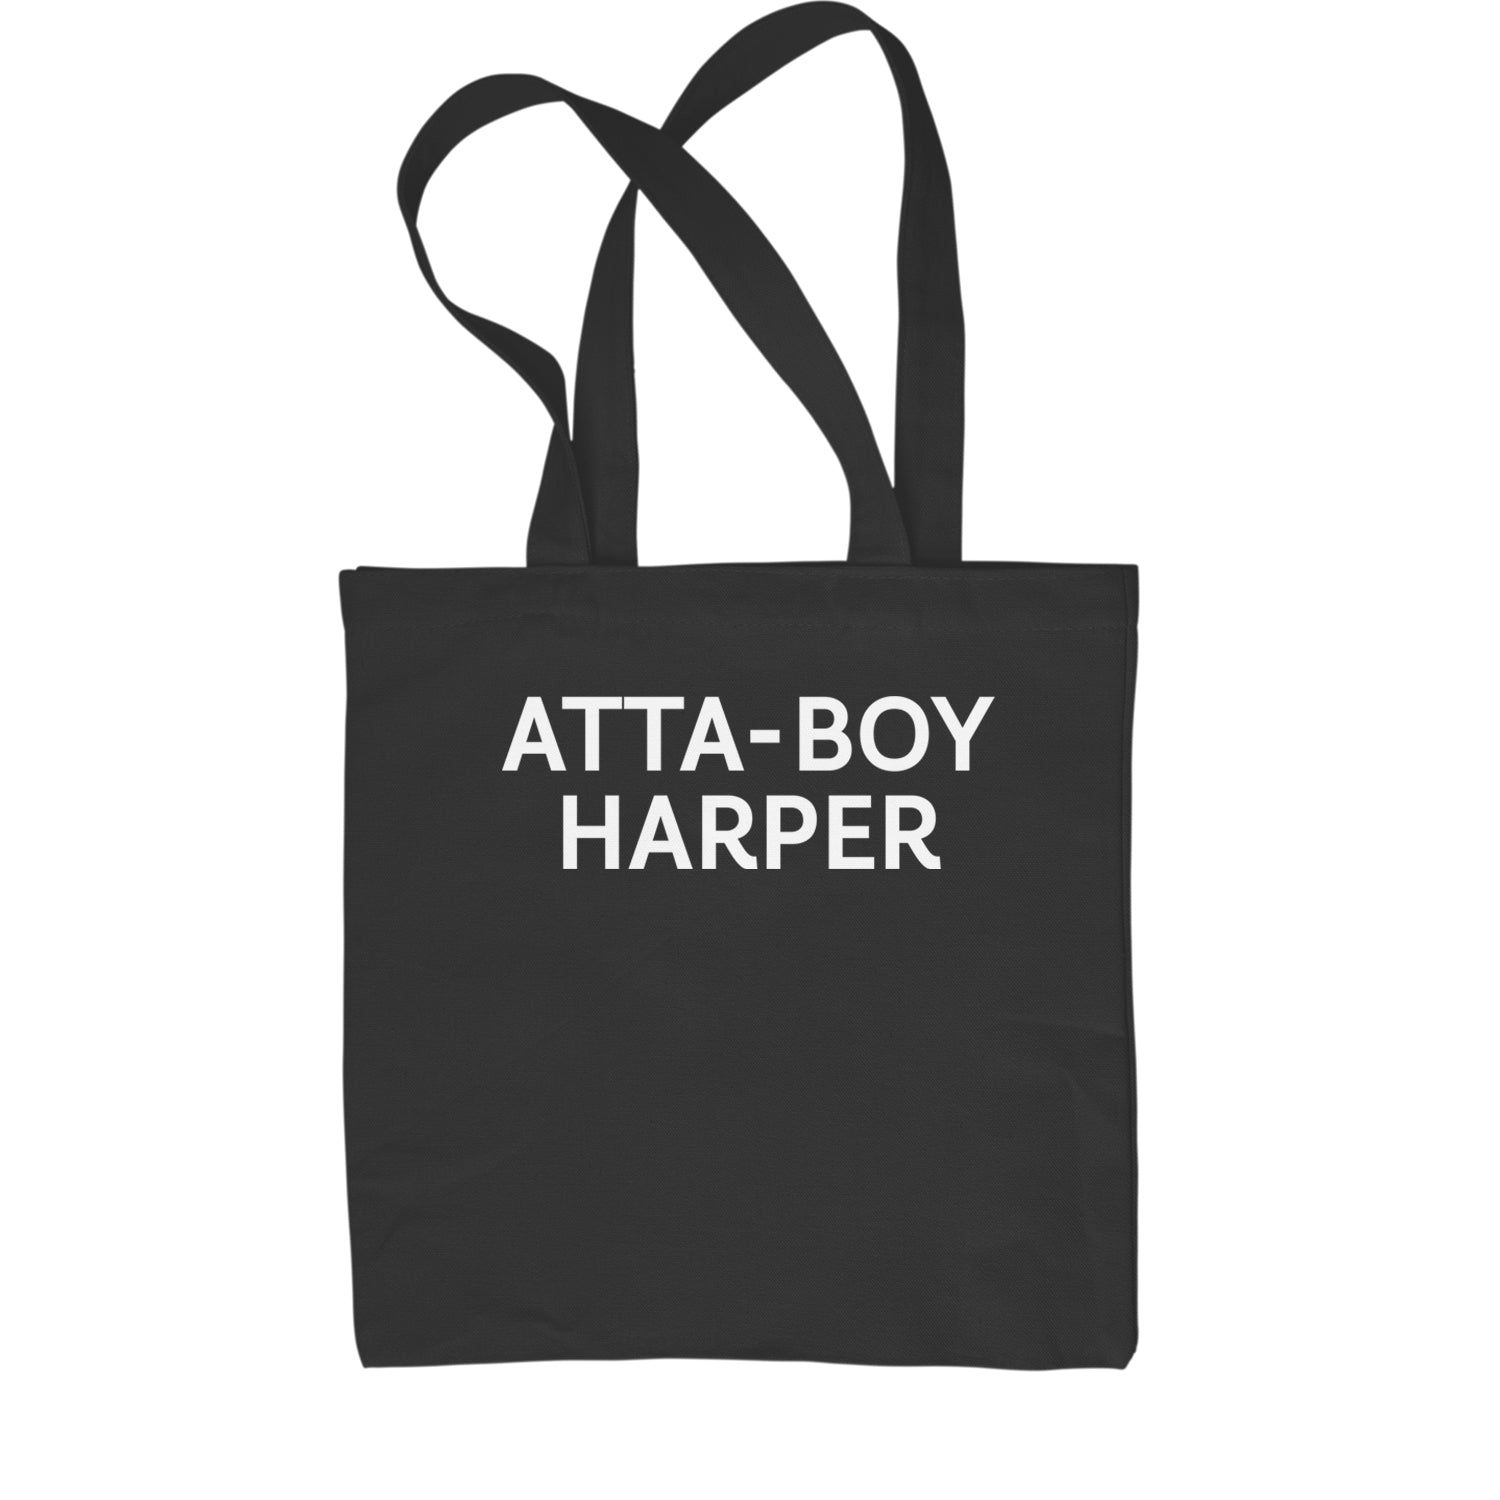 Atta-Boy Harper Philadelphia Shopping Tote Bag